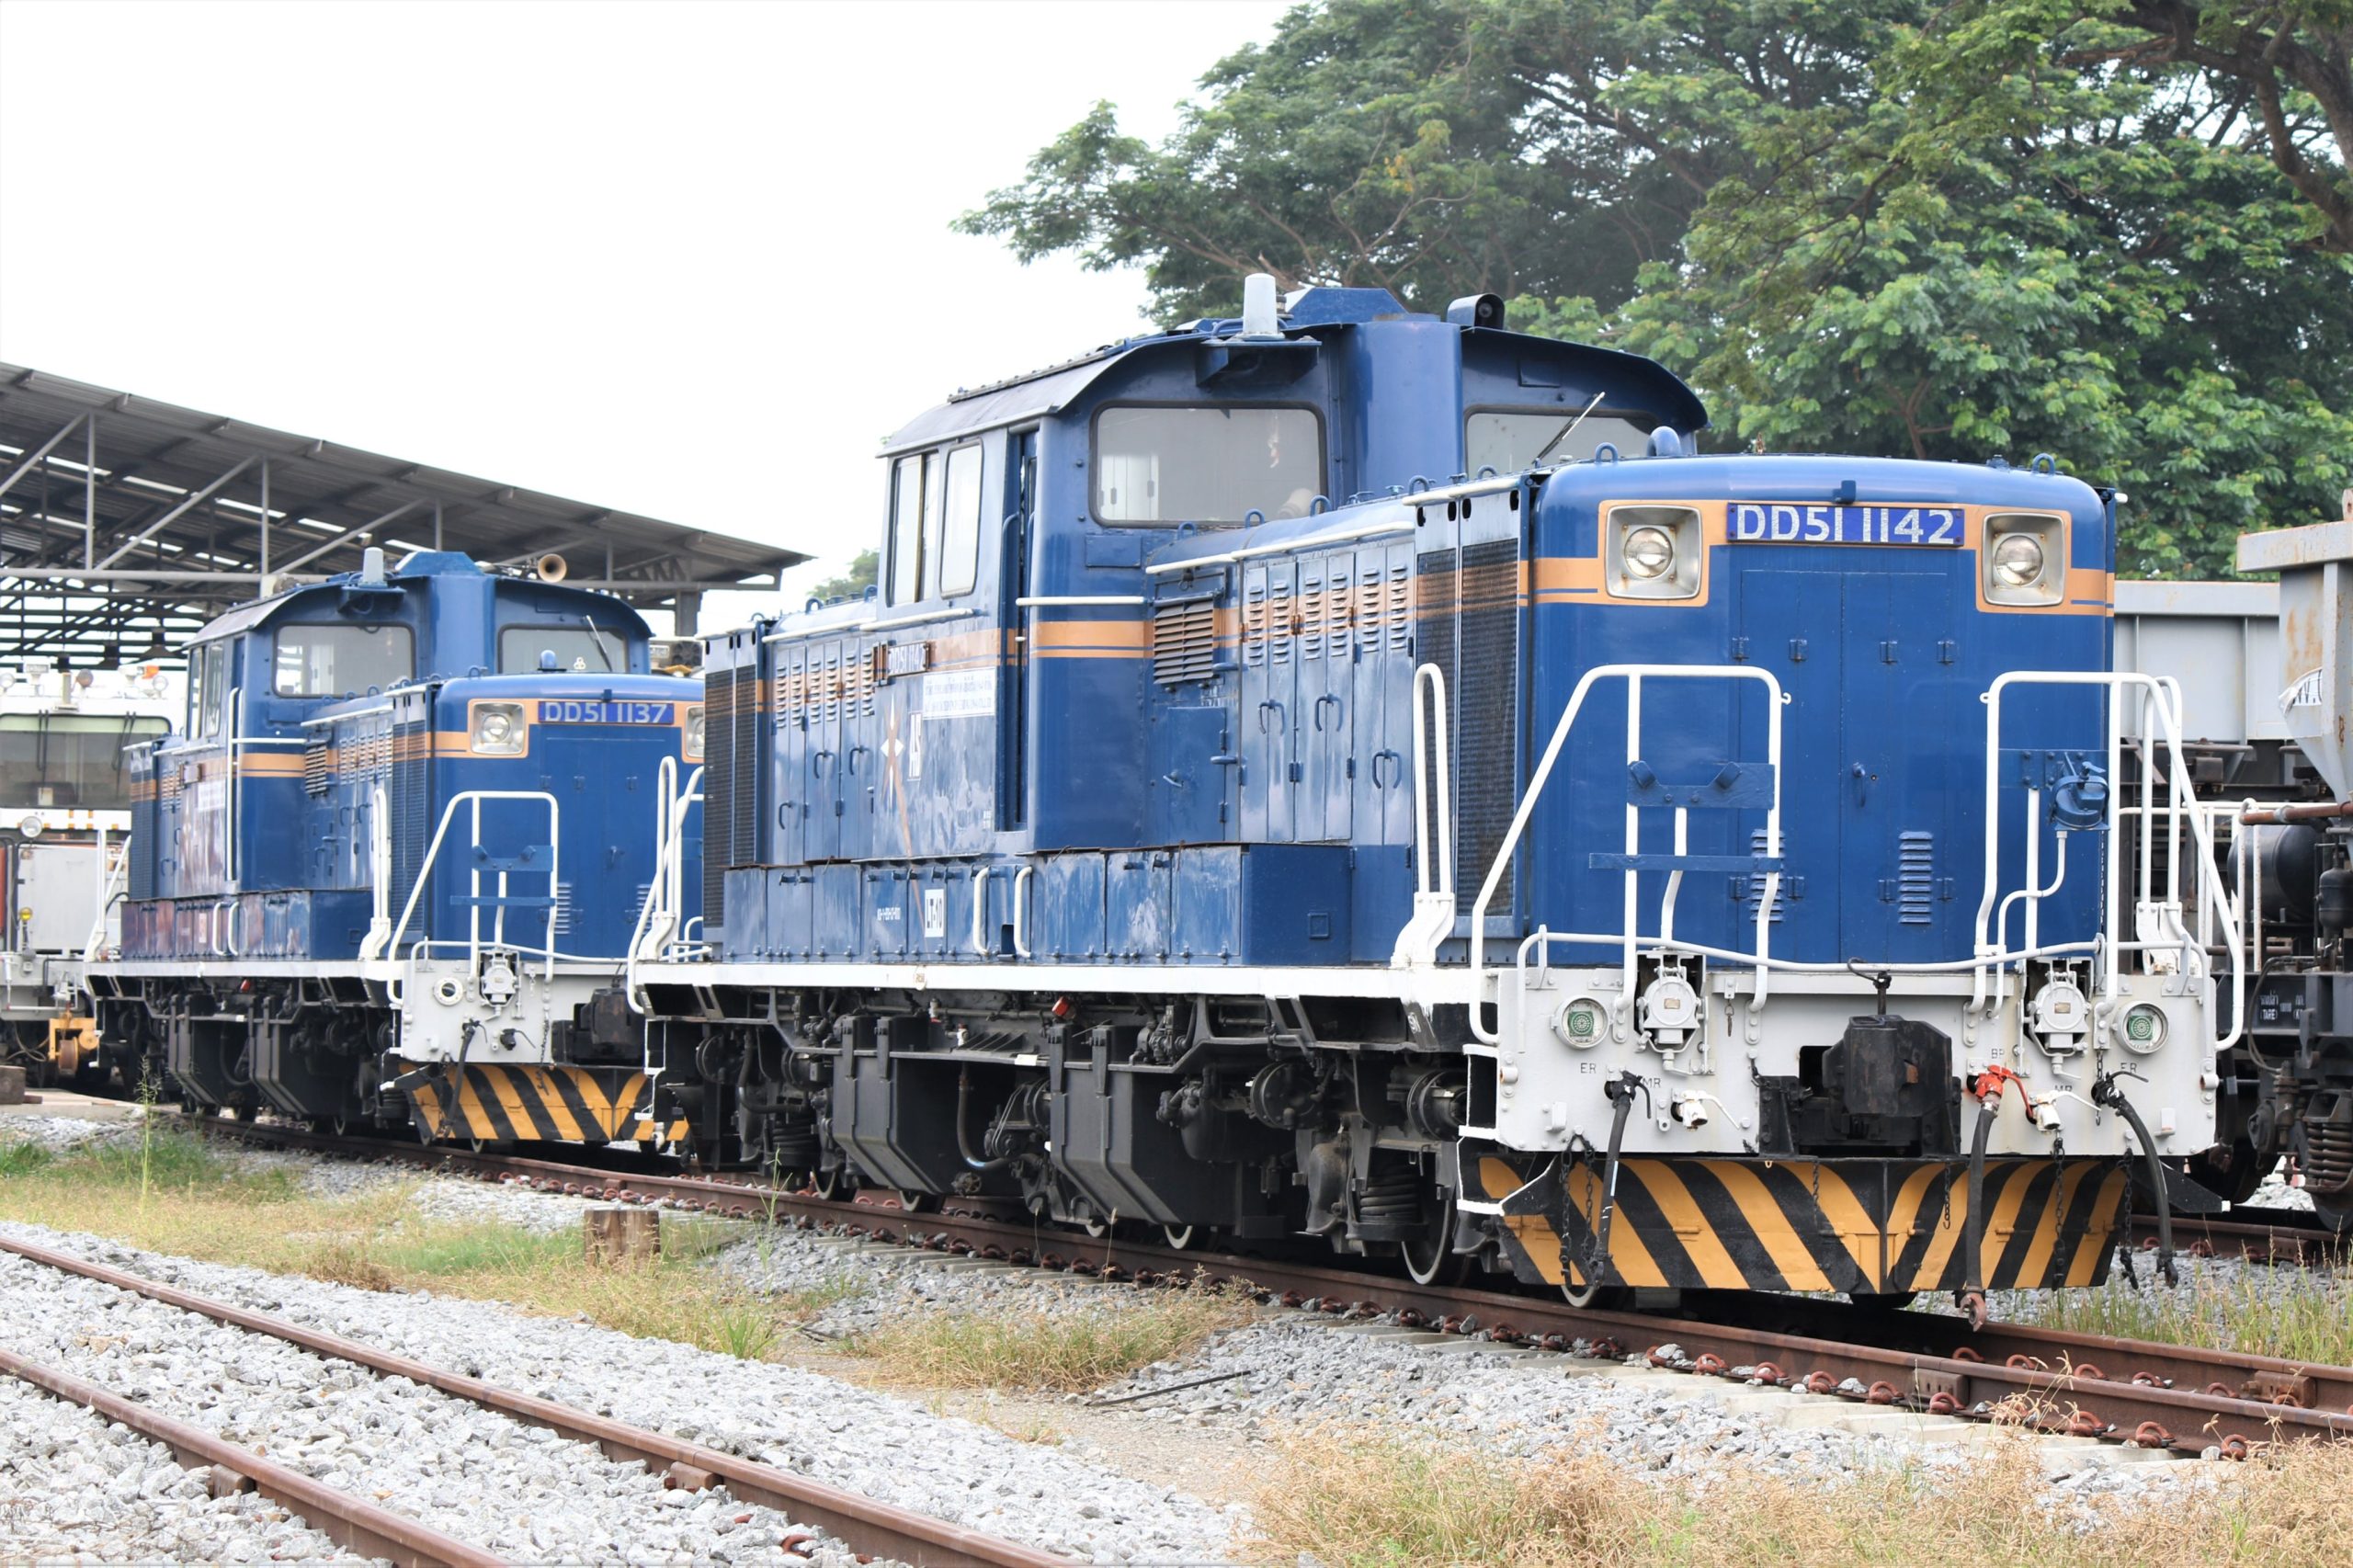 Lokomotif DD51-1142 dan DD51-1137 di Thailand yang berhasil dihidupkan pecinta kereta api dari dana hasil crowdfunding